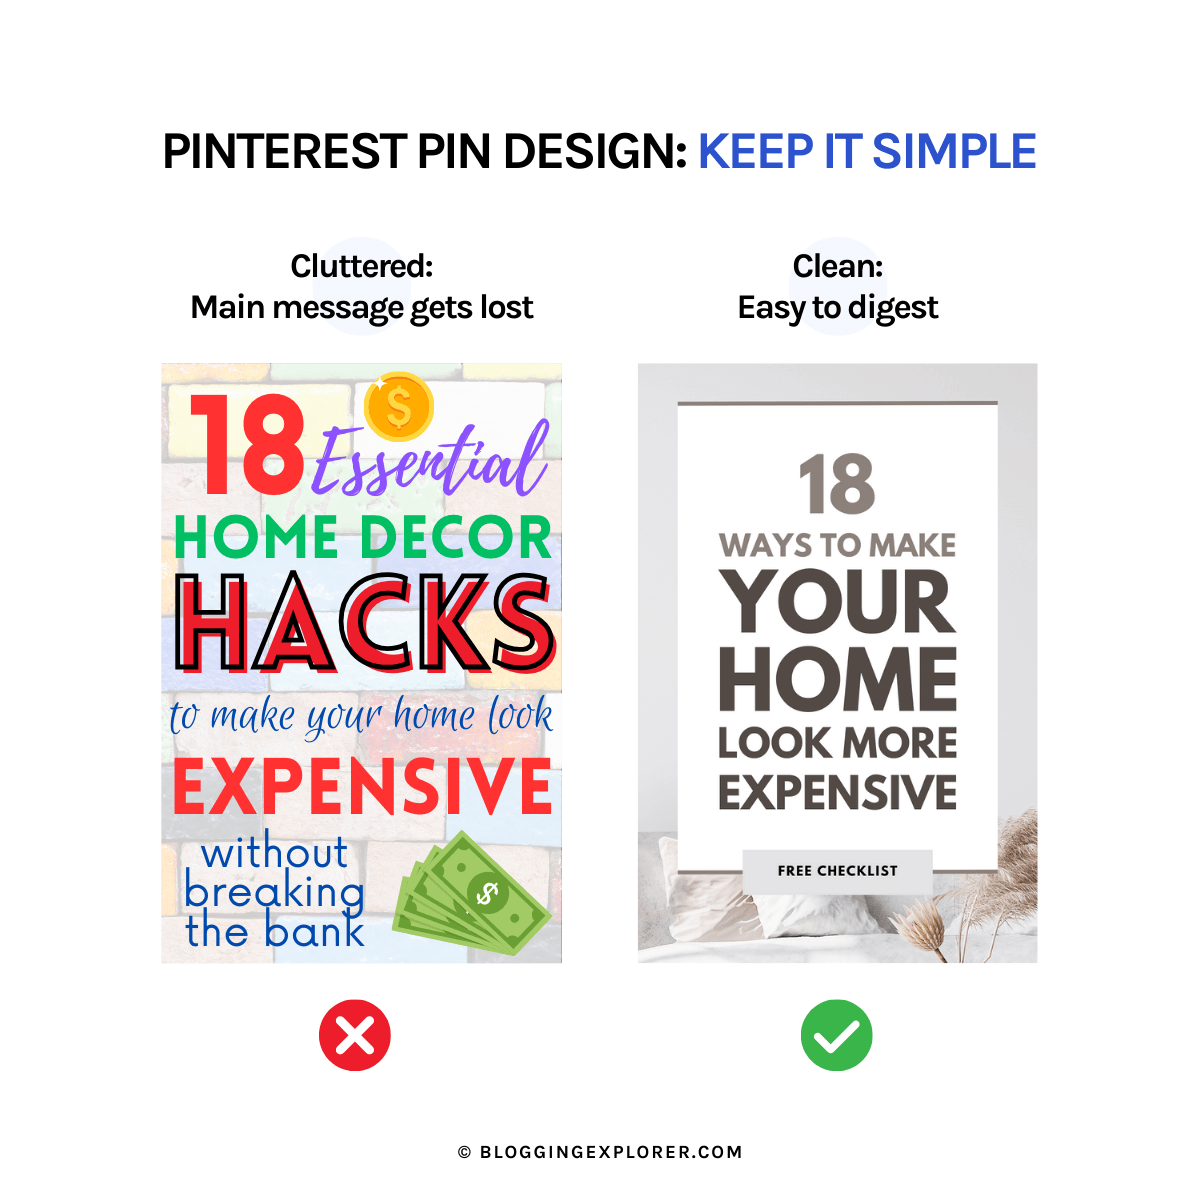 Pinterest pin design tips – Keep it simple